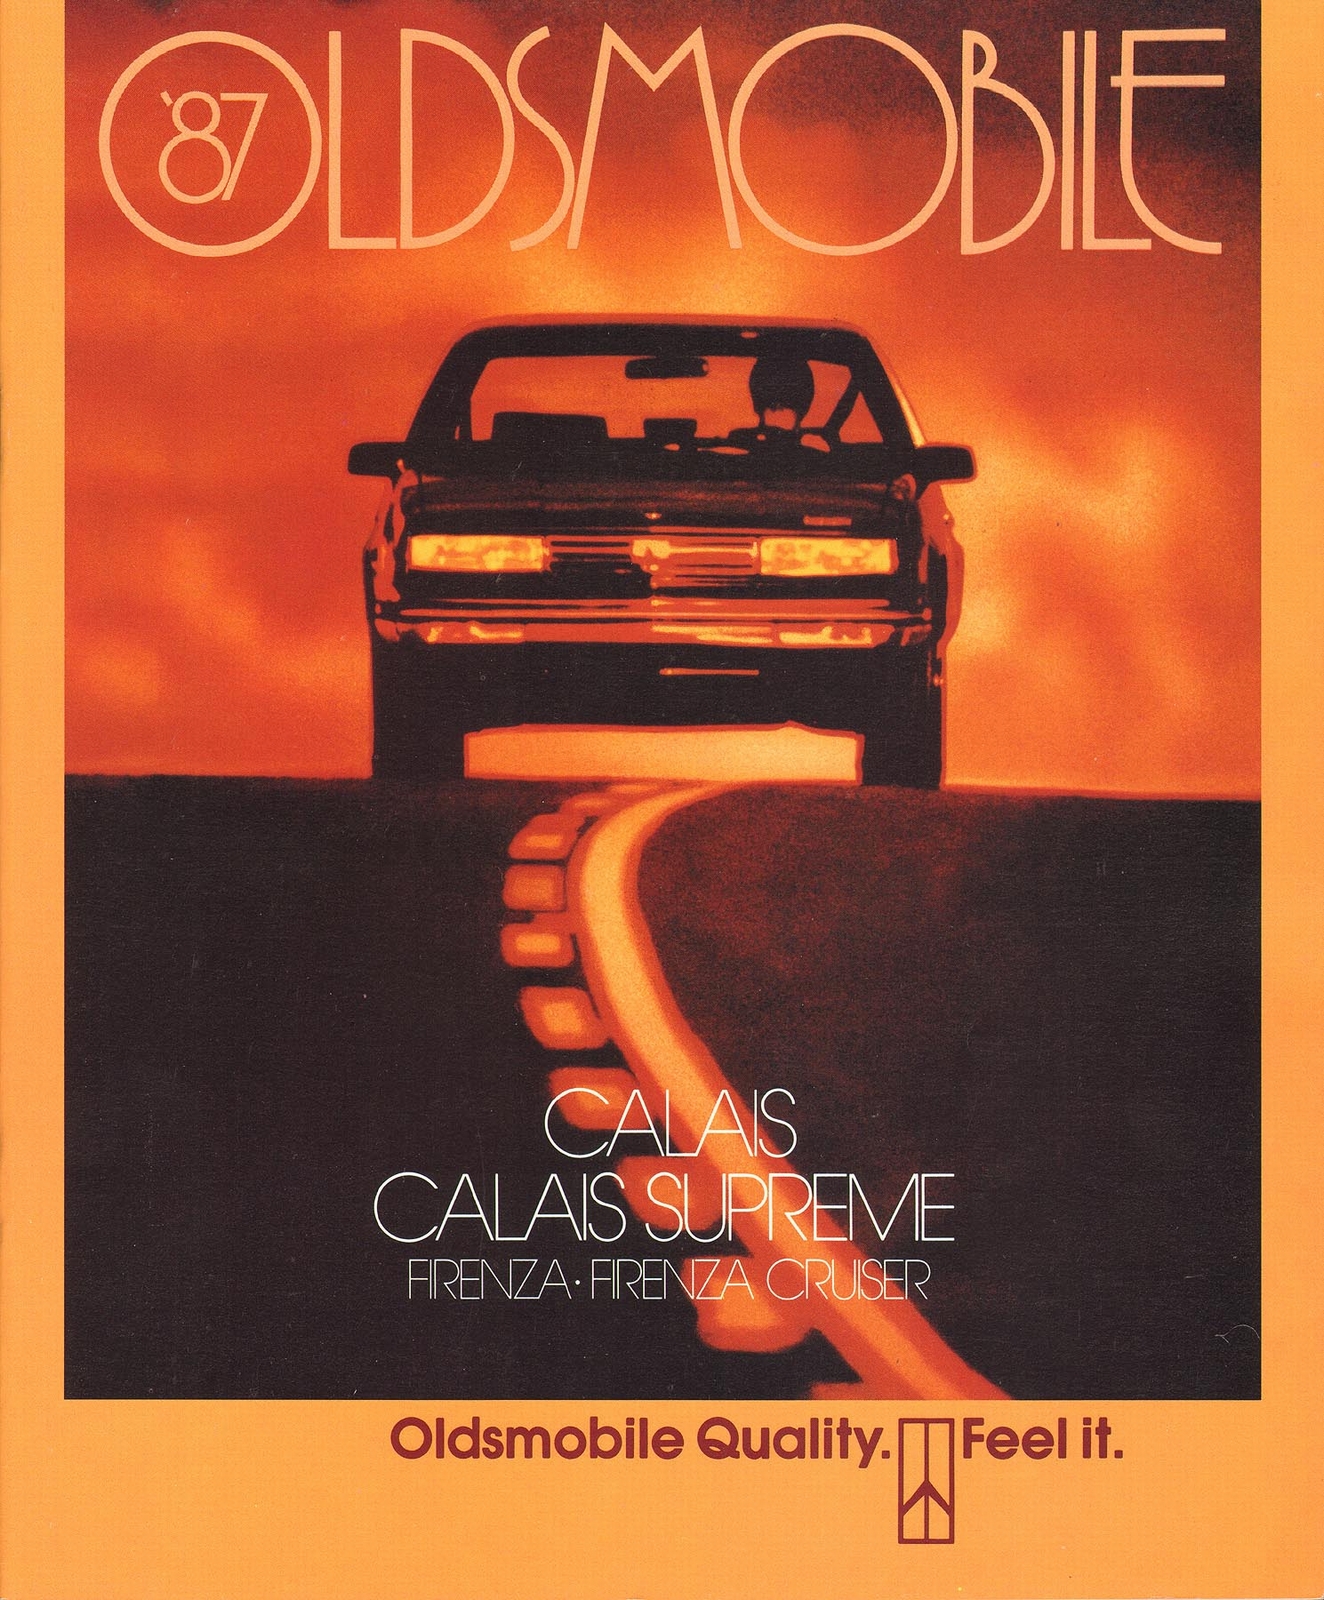 n_1987 Oldsmobile Small Size-01.jpg